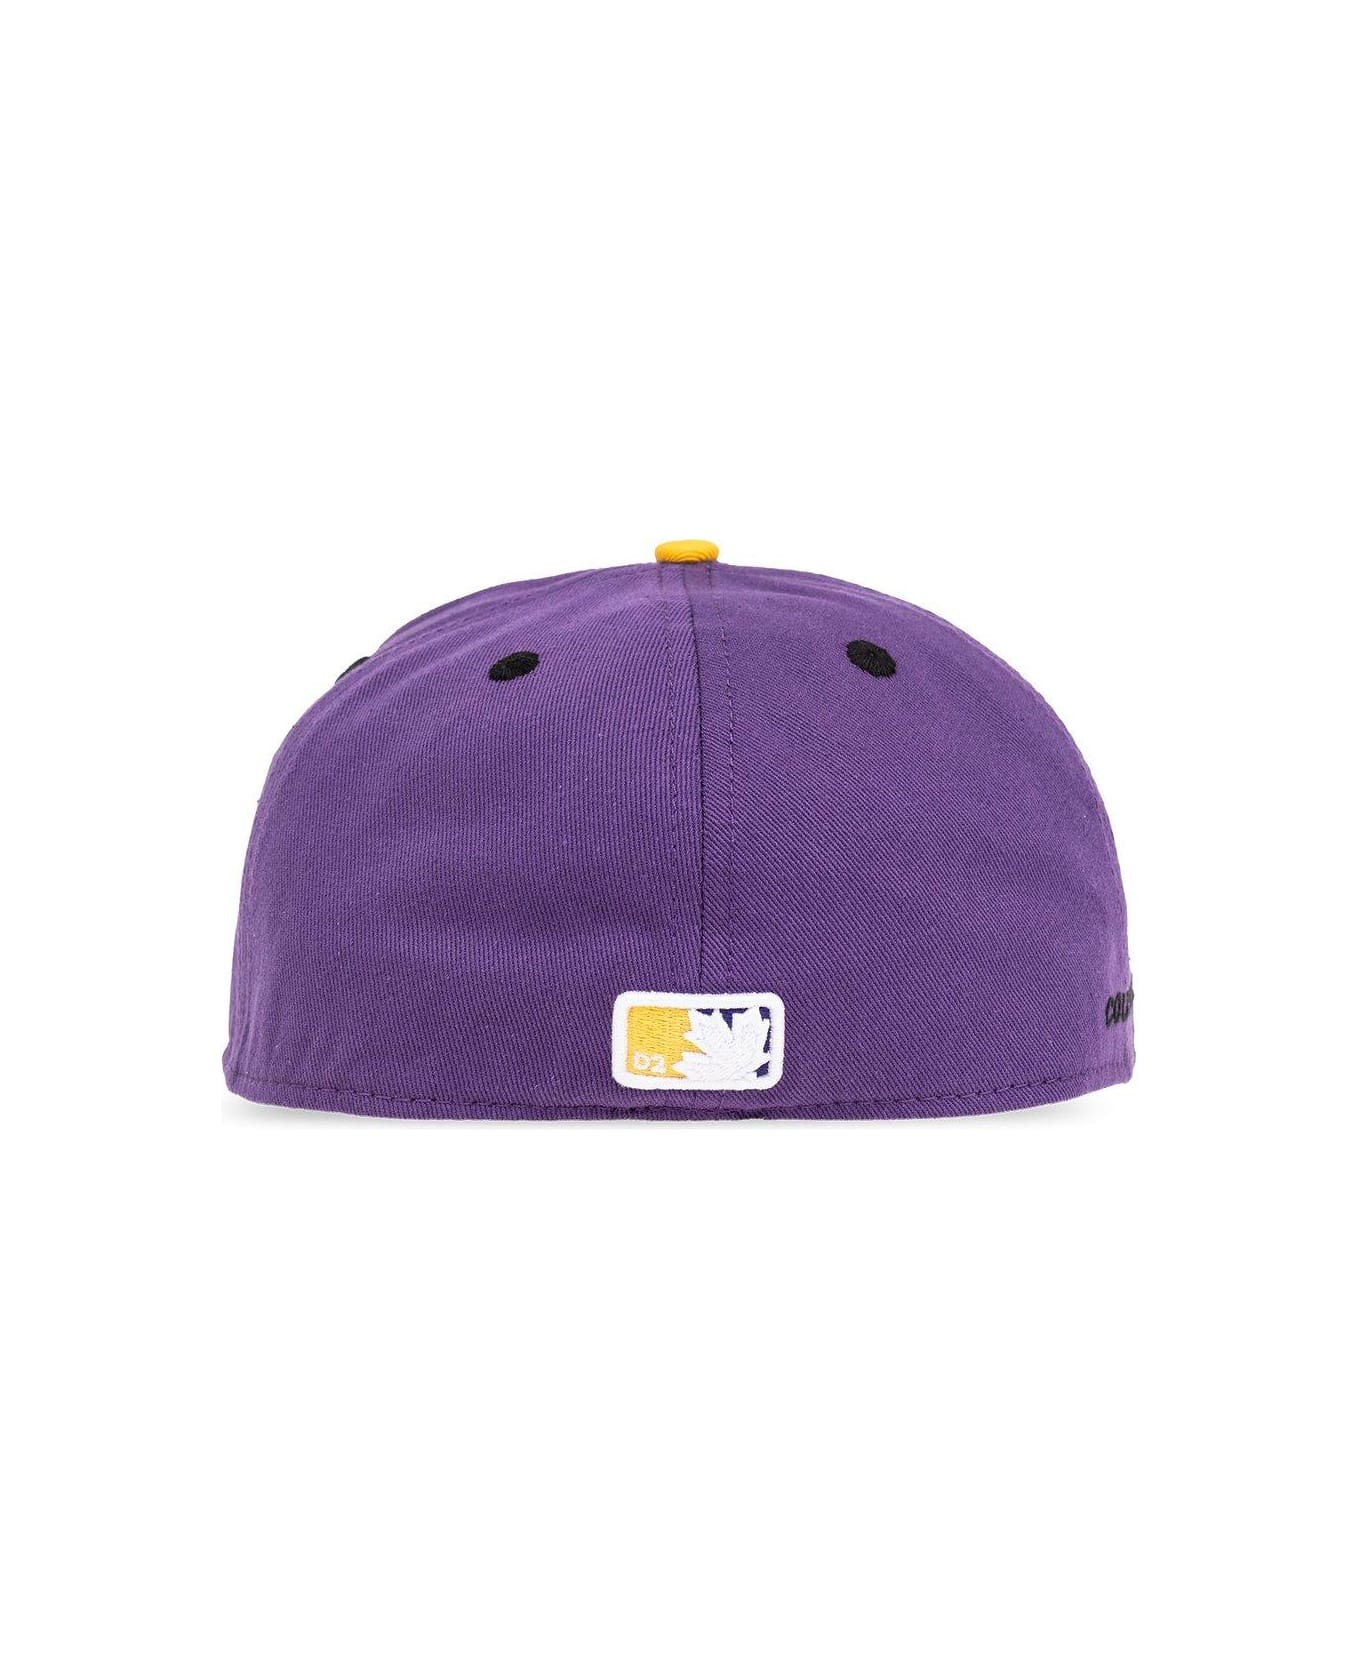 Dsquared2 Basket Baseball Cap - Viola giallo